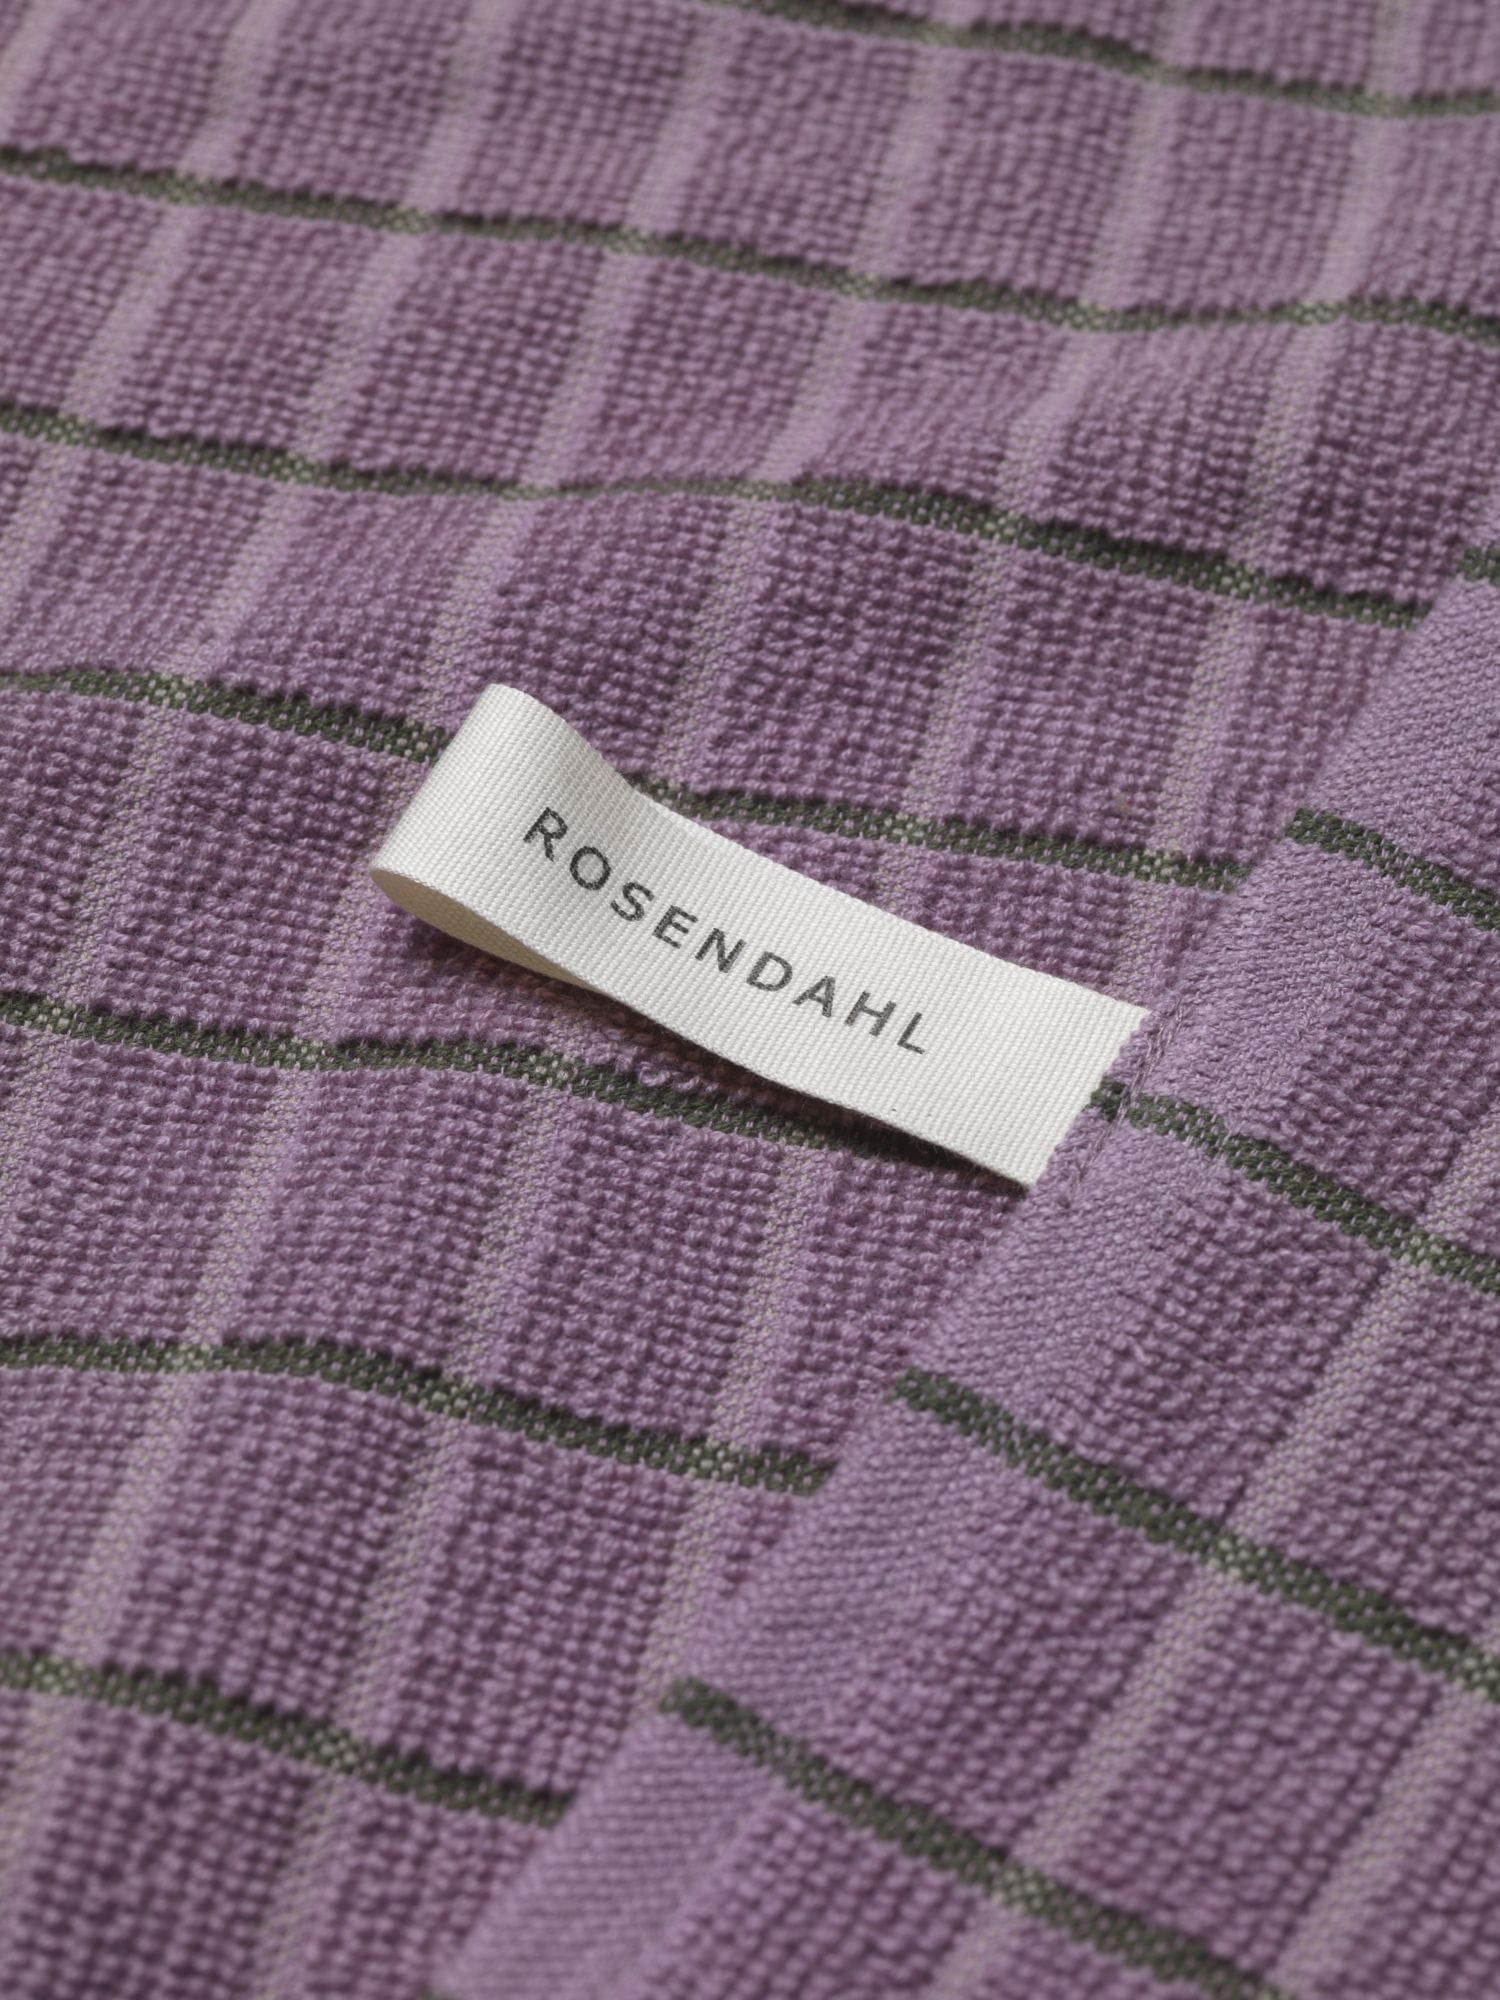 Rosendahl Rosendahl Textiler Terry Tiring Suppy 50x70 cm, lavendel